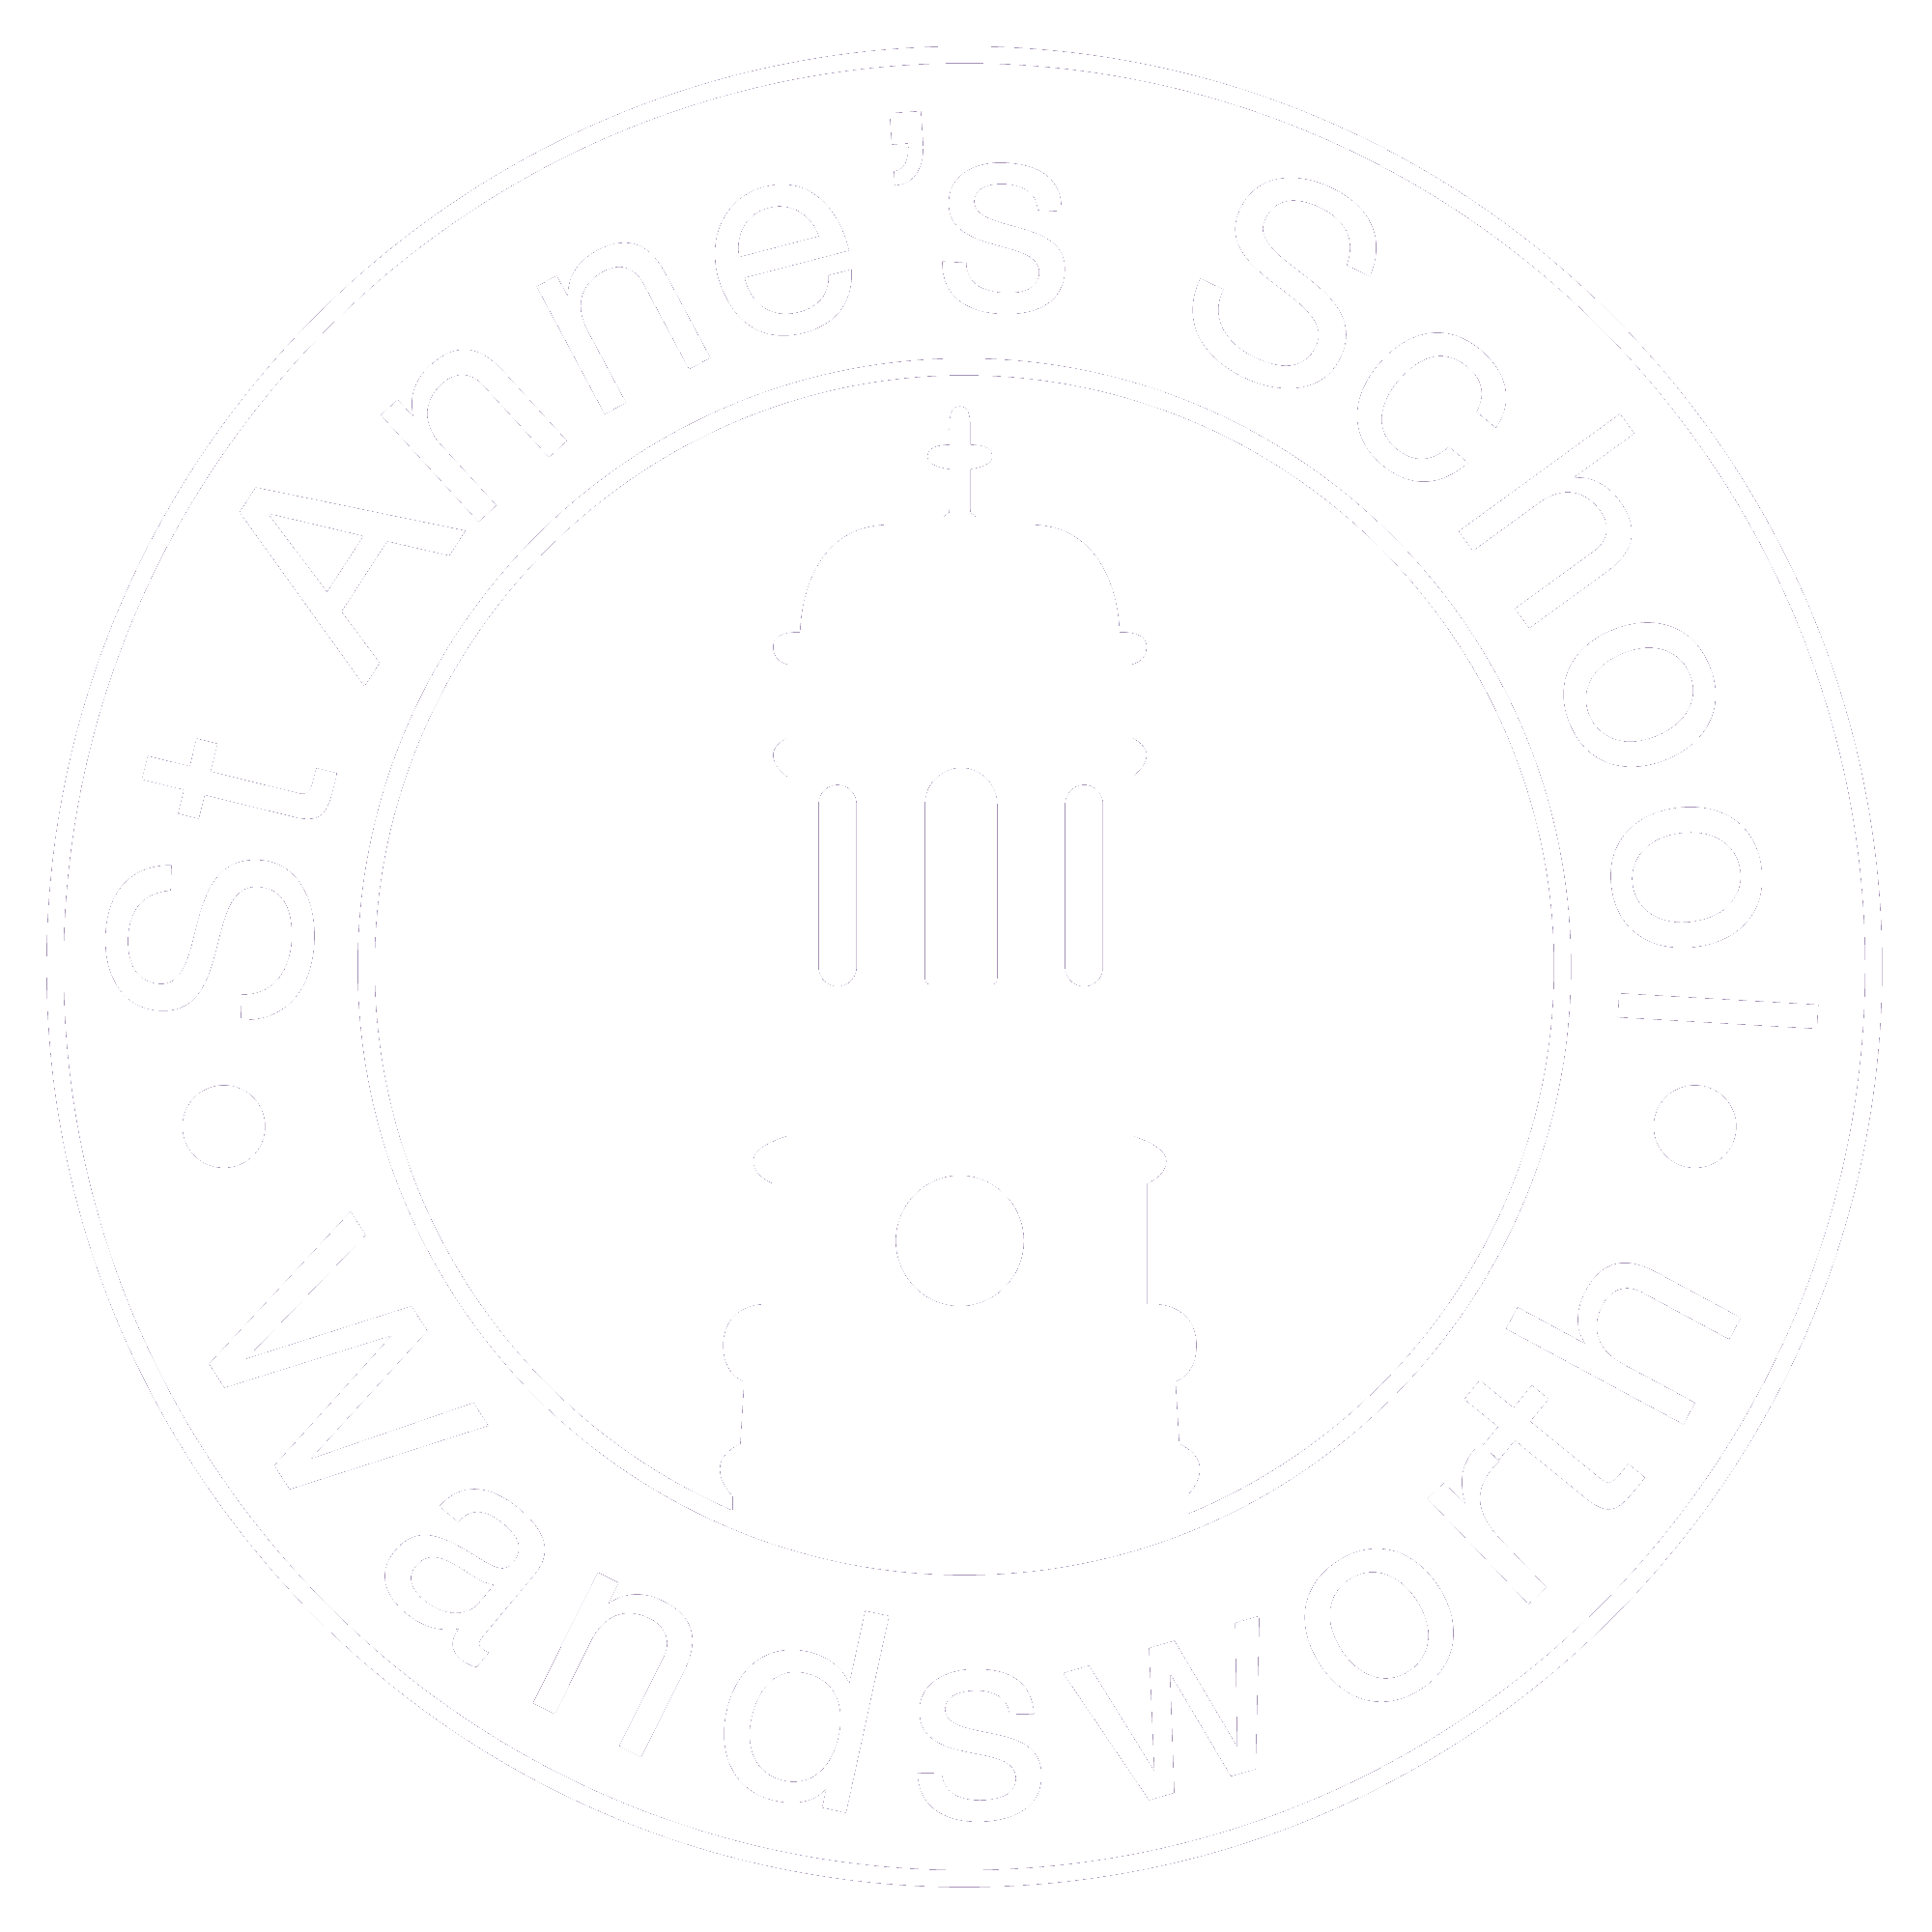 St Anne's CE School, Wandsworth